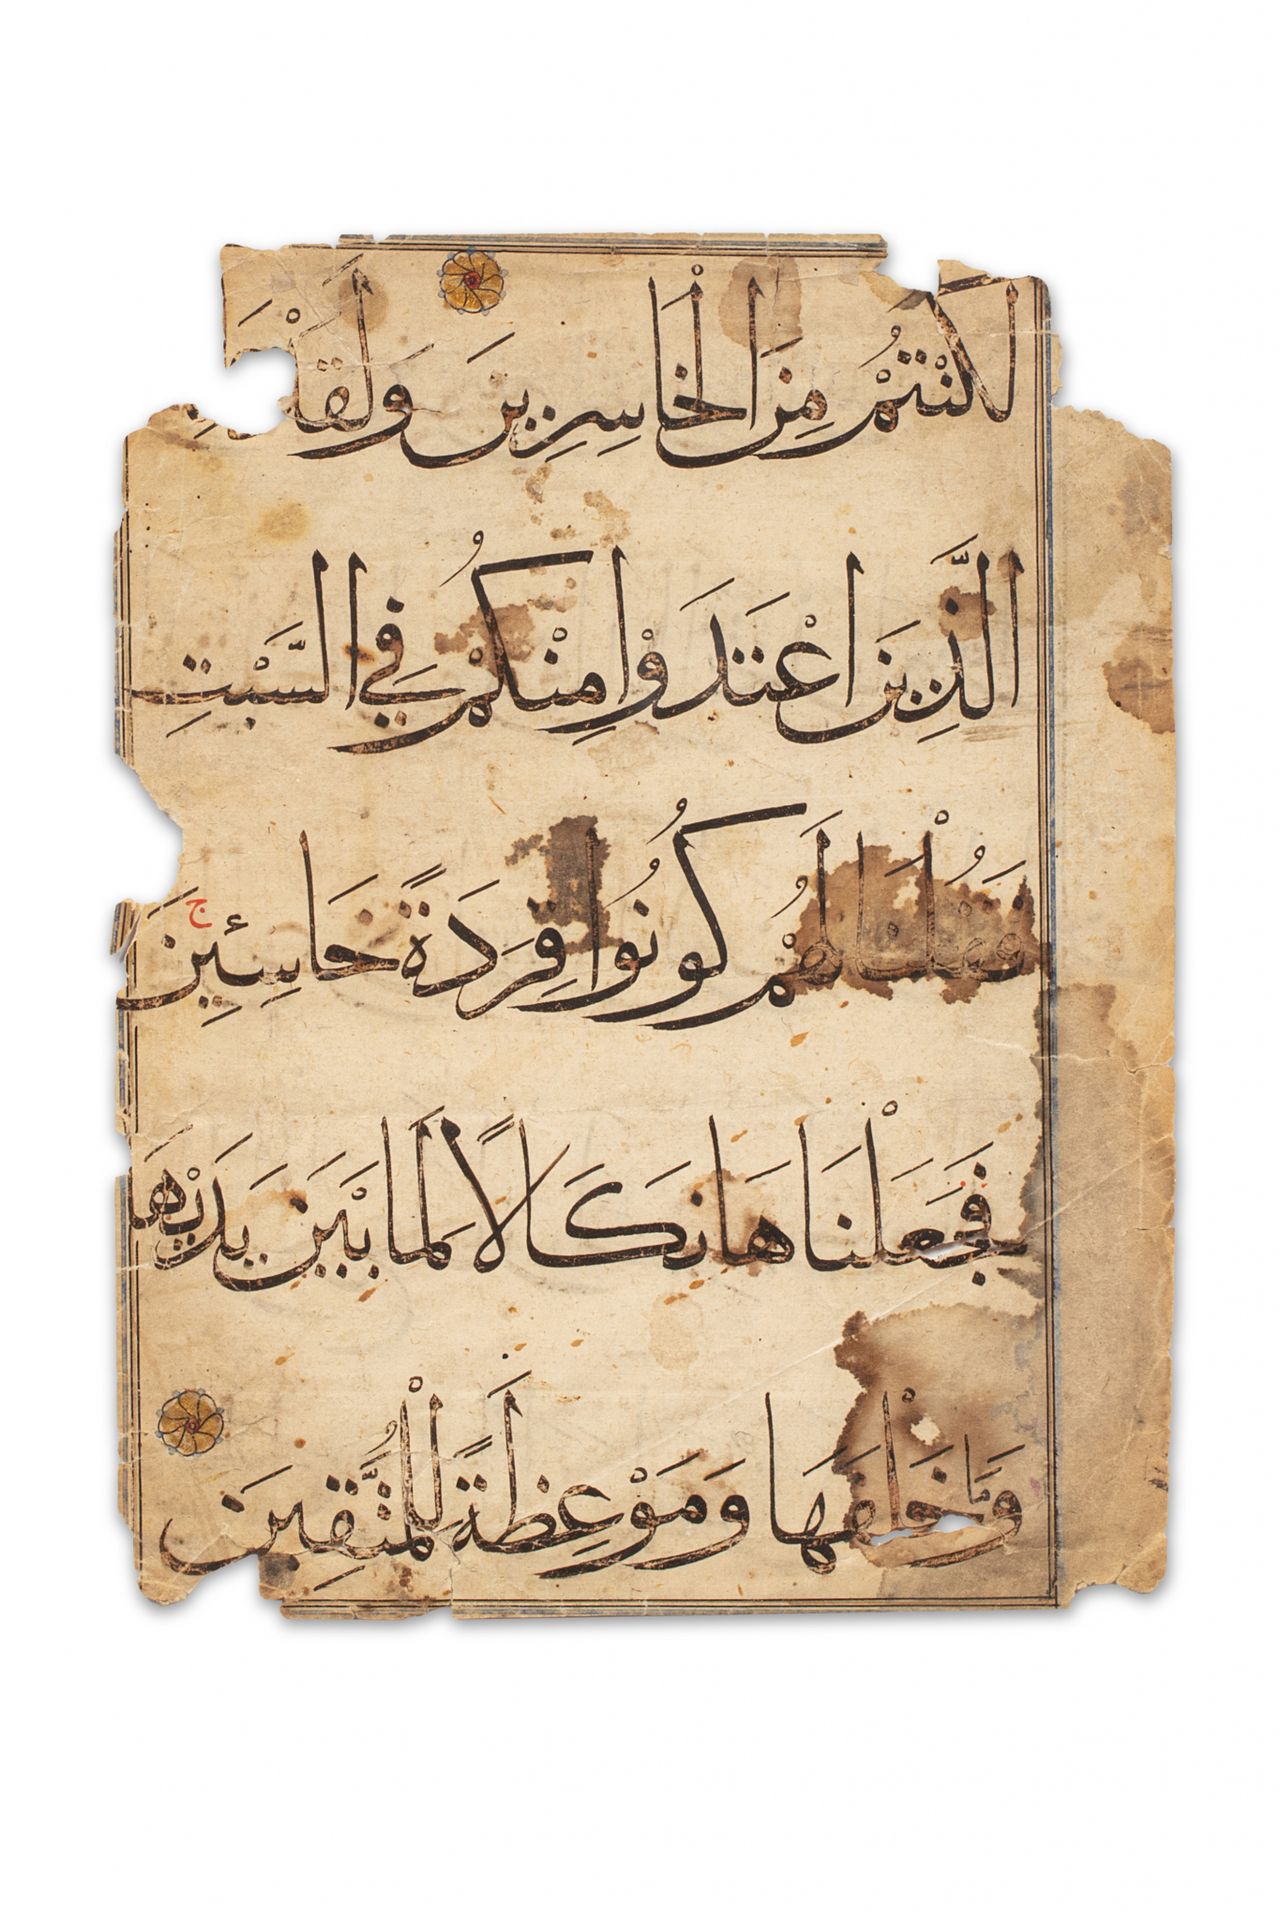 Folio de Coran mamlouque Ägypten, 15. Jahrhundert

Ein großes Koranblatt, geschr&hellip;